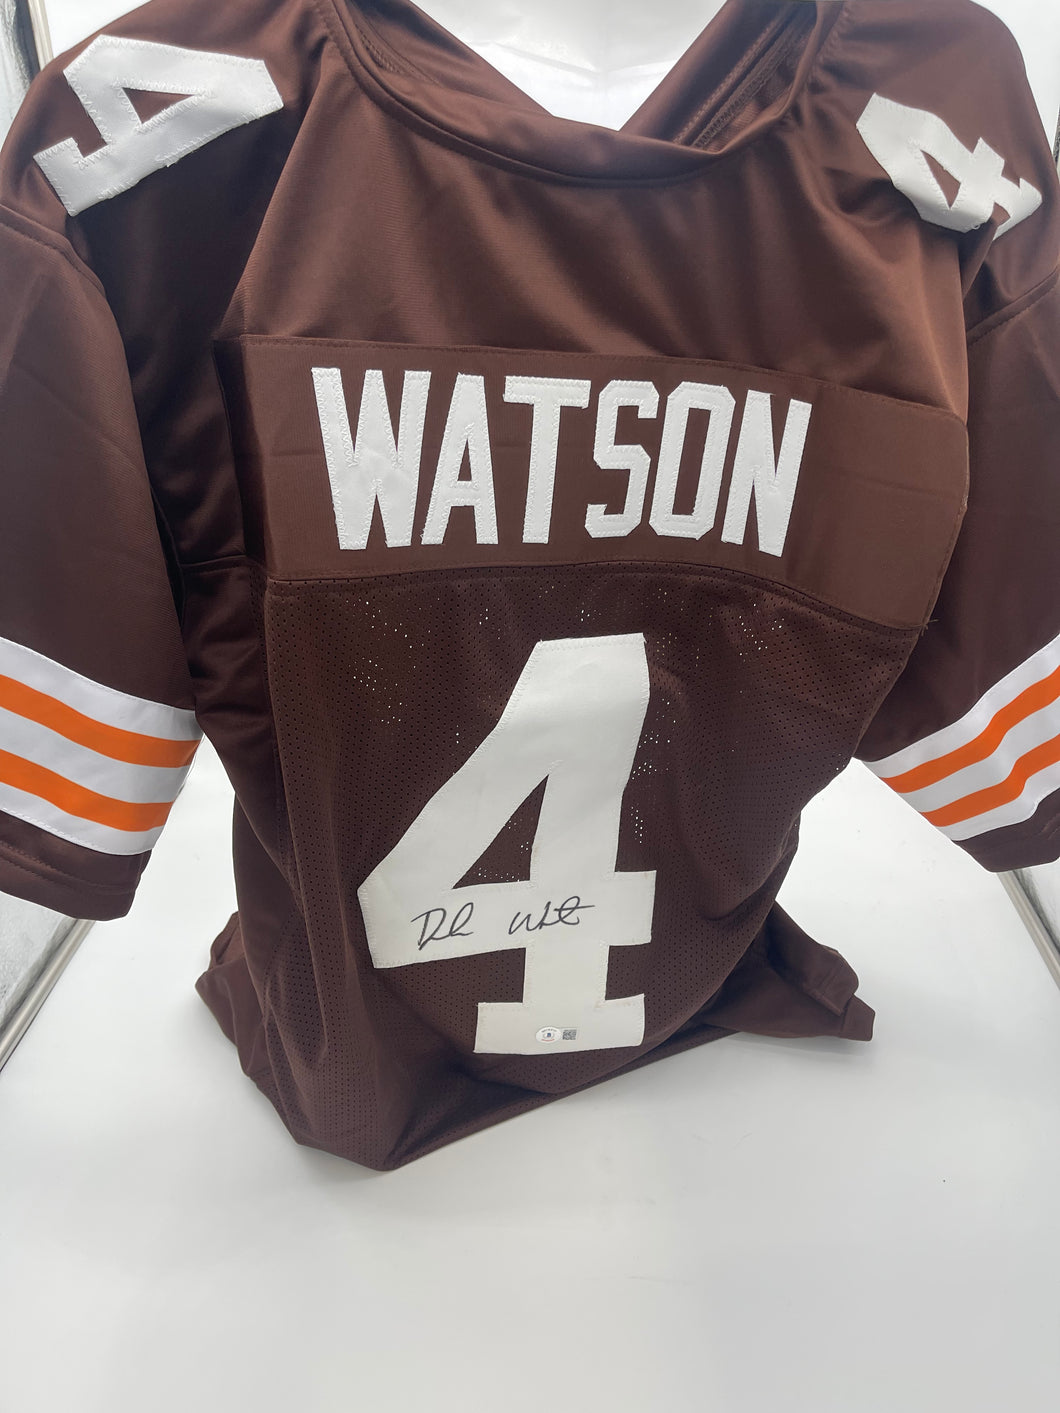 Deshaun Watson signed jersey